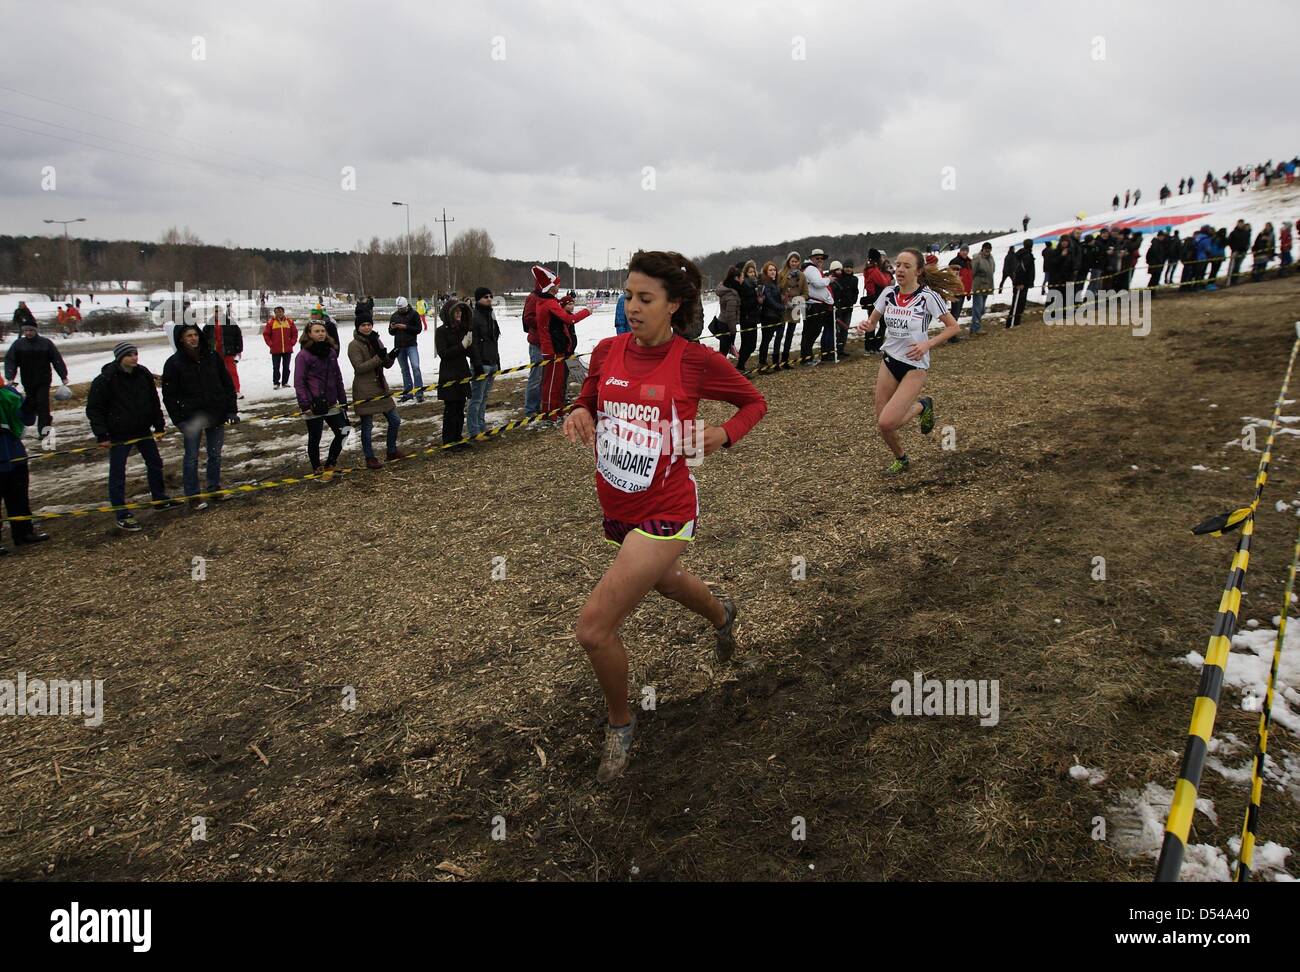 Bydgoszcz, Poland 24th, March 2013 IAAF World Cross Country Chamiponships. Junior Race Woman. Pictured: Fadwa Sidi Madane Stock Photo